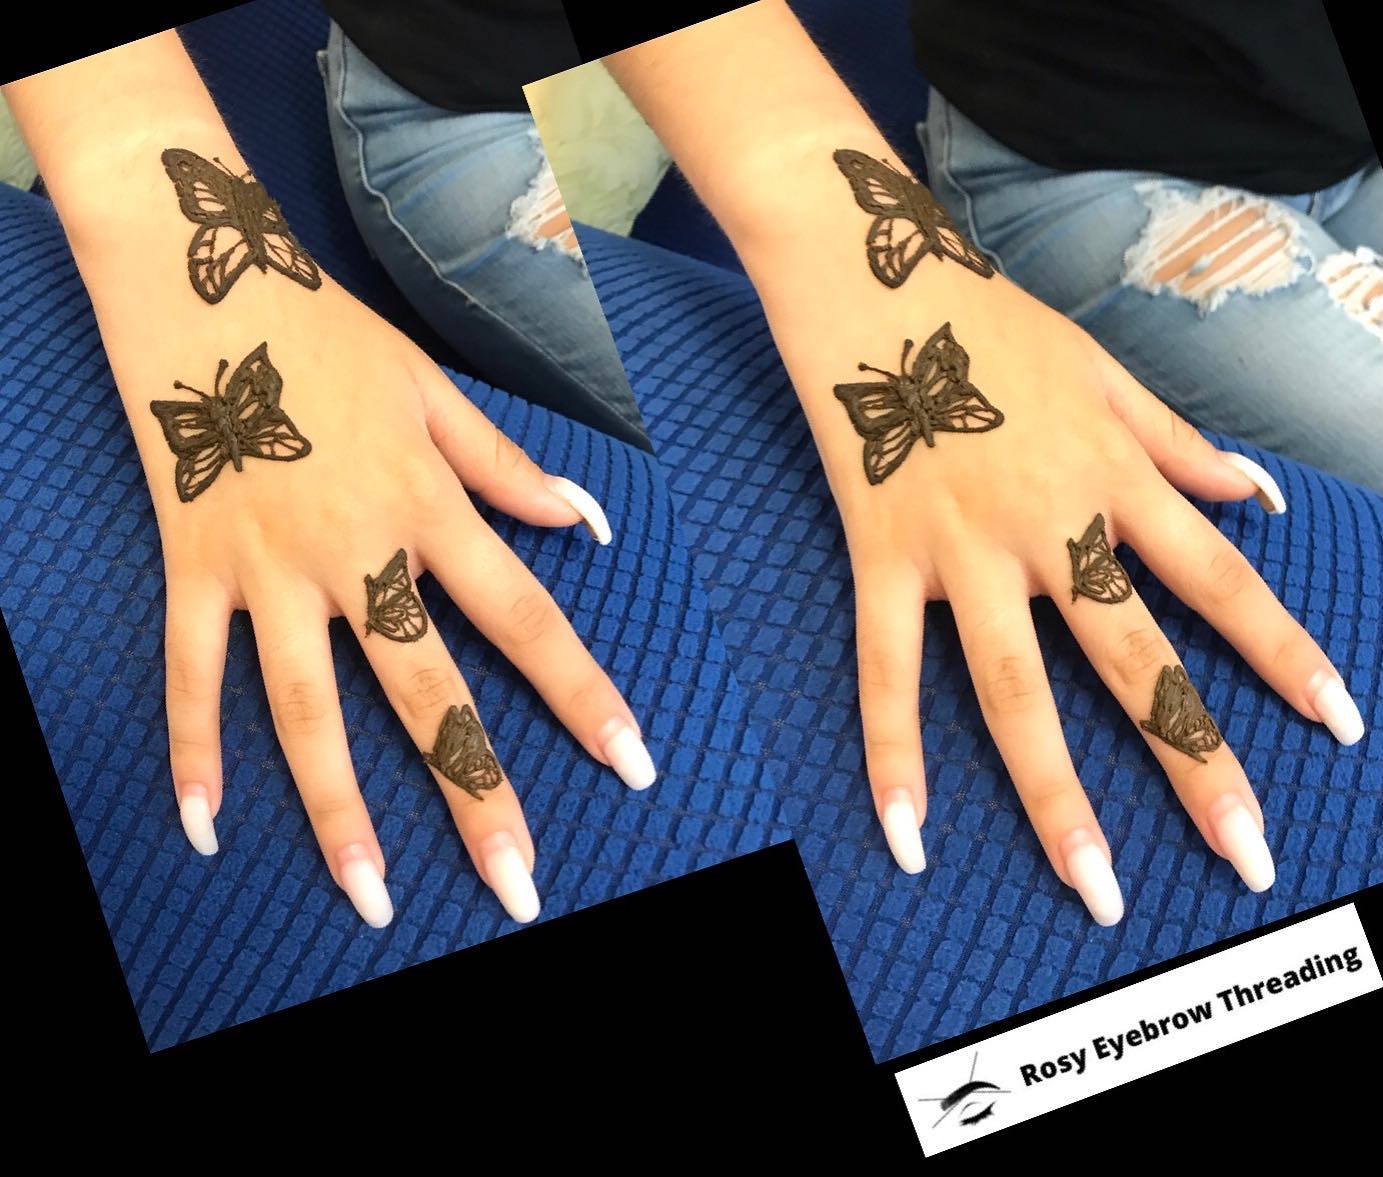 krater Vijandig Verlichting Henna Tattoo Design | Henna Tattoo in Las Vegas – Rosy Eyebrow Threading